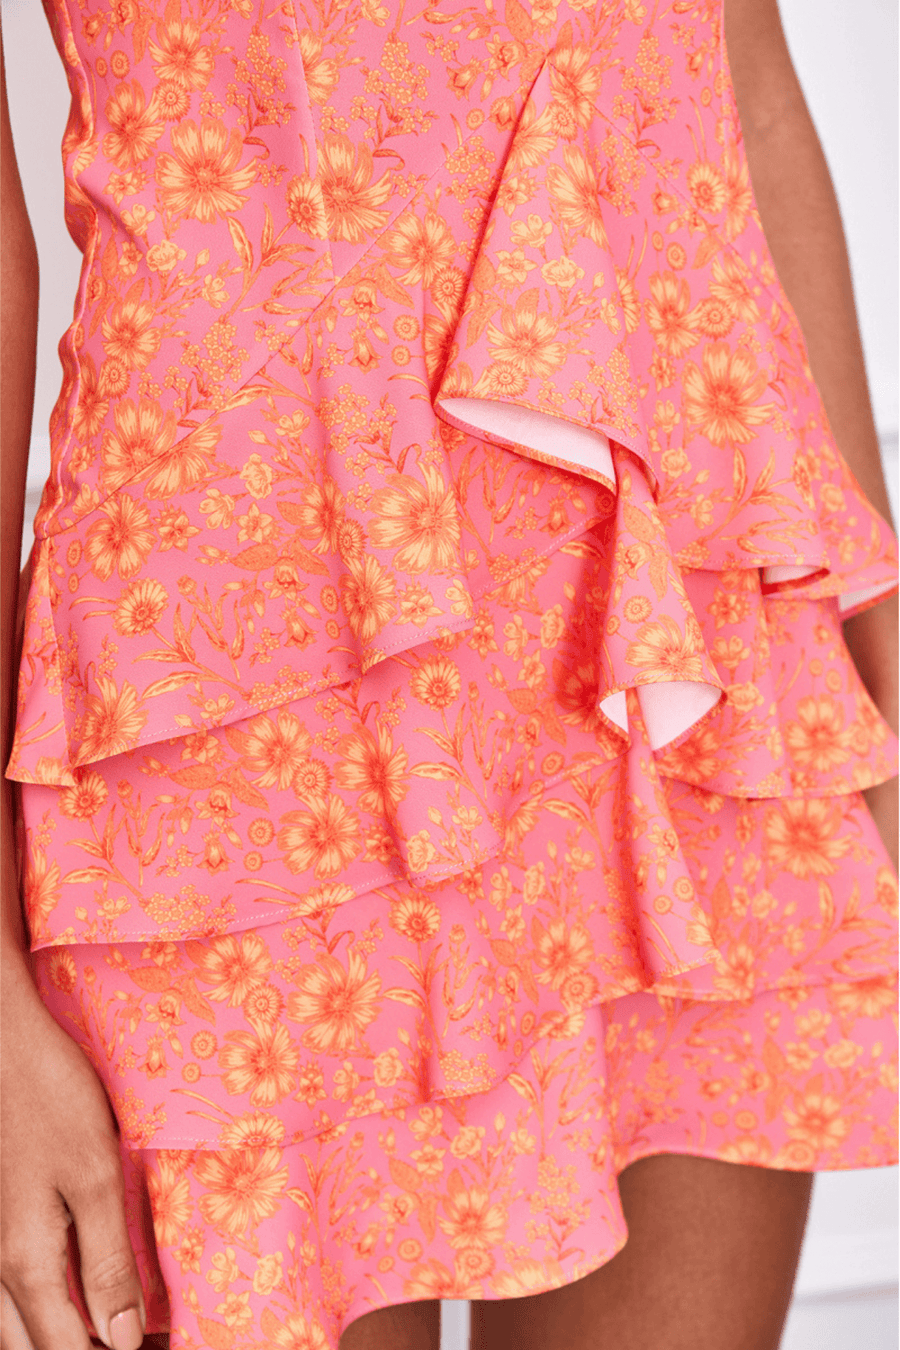 Camellia Puff Sleeve Dress (Orange/Pink) - Mergim